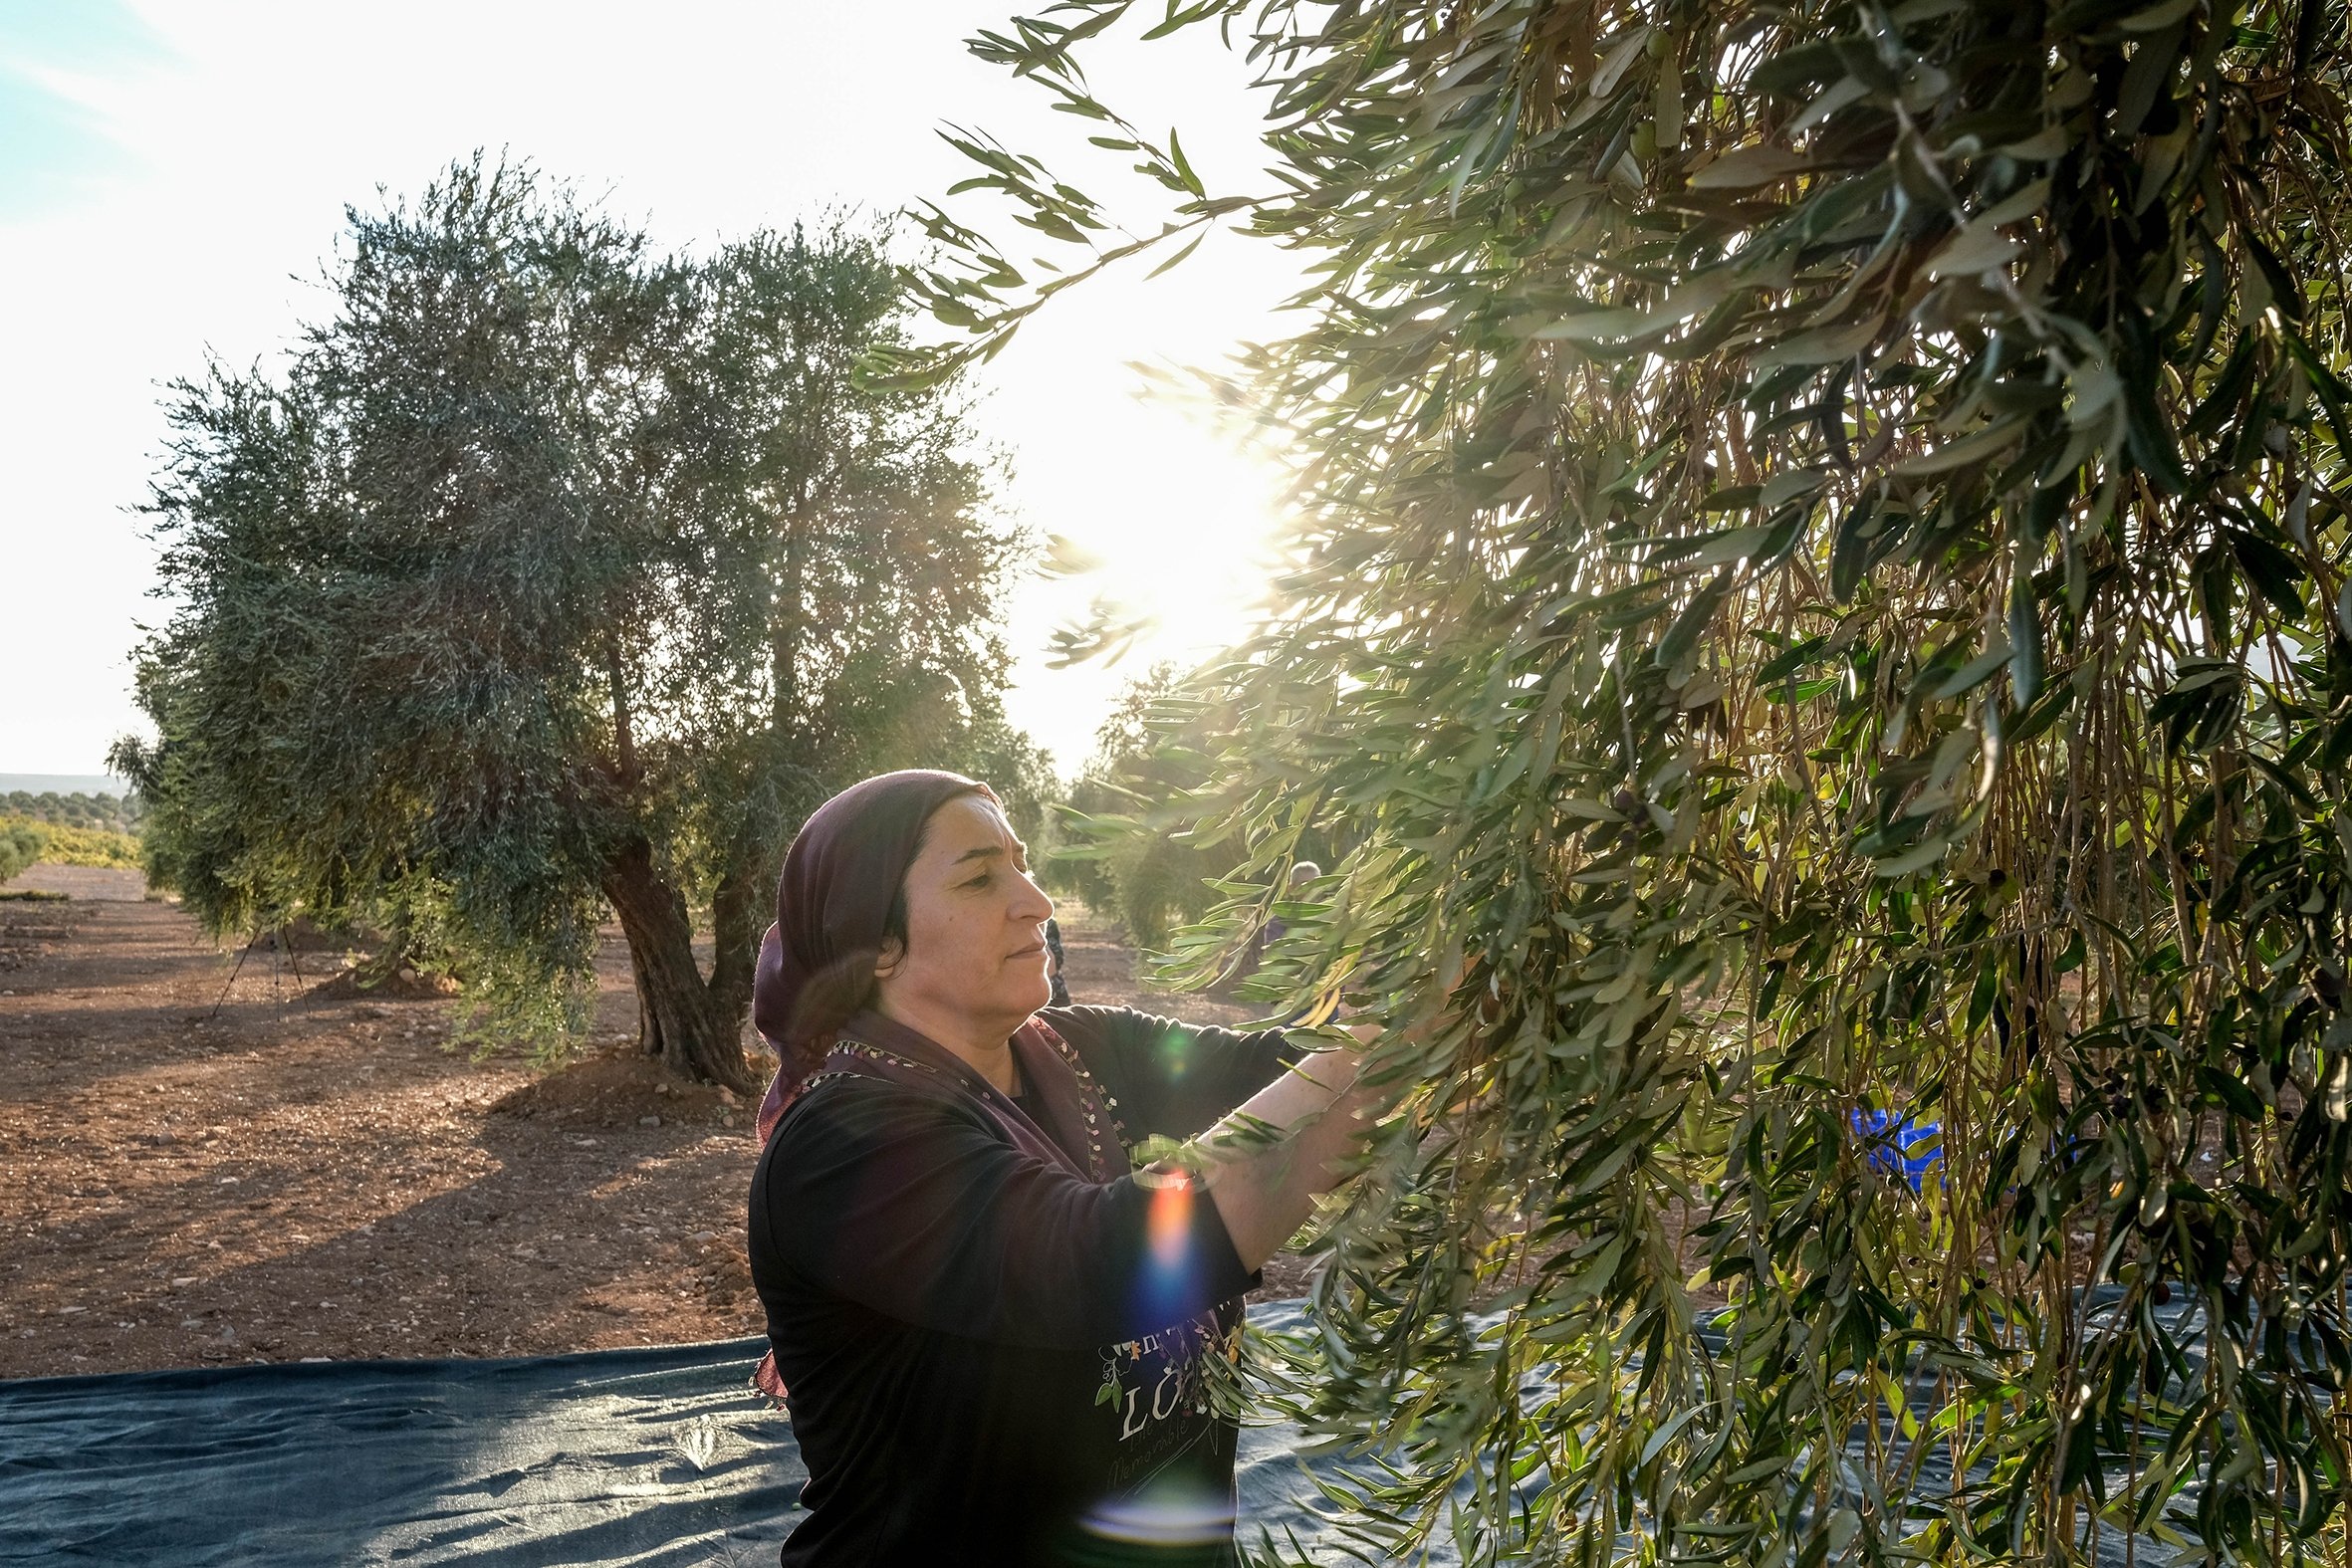 A woman picks olives, in Kilis, southern Turkey, Oct. 27, 2021. (PHOTO BY UĞUR YILDIRIM)